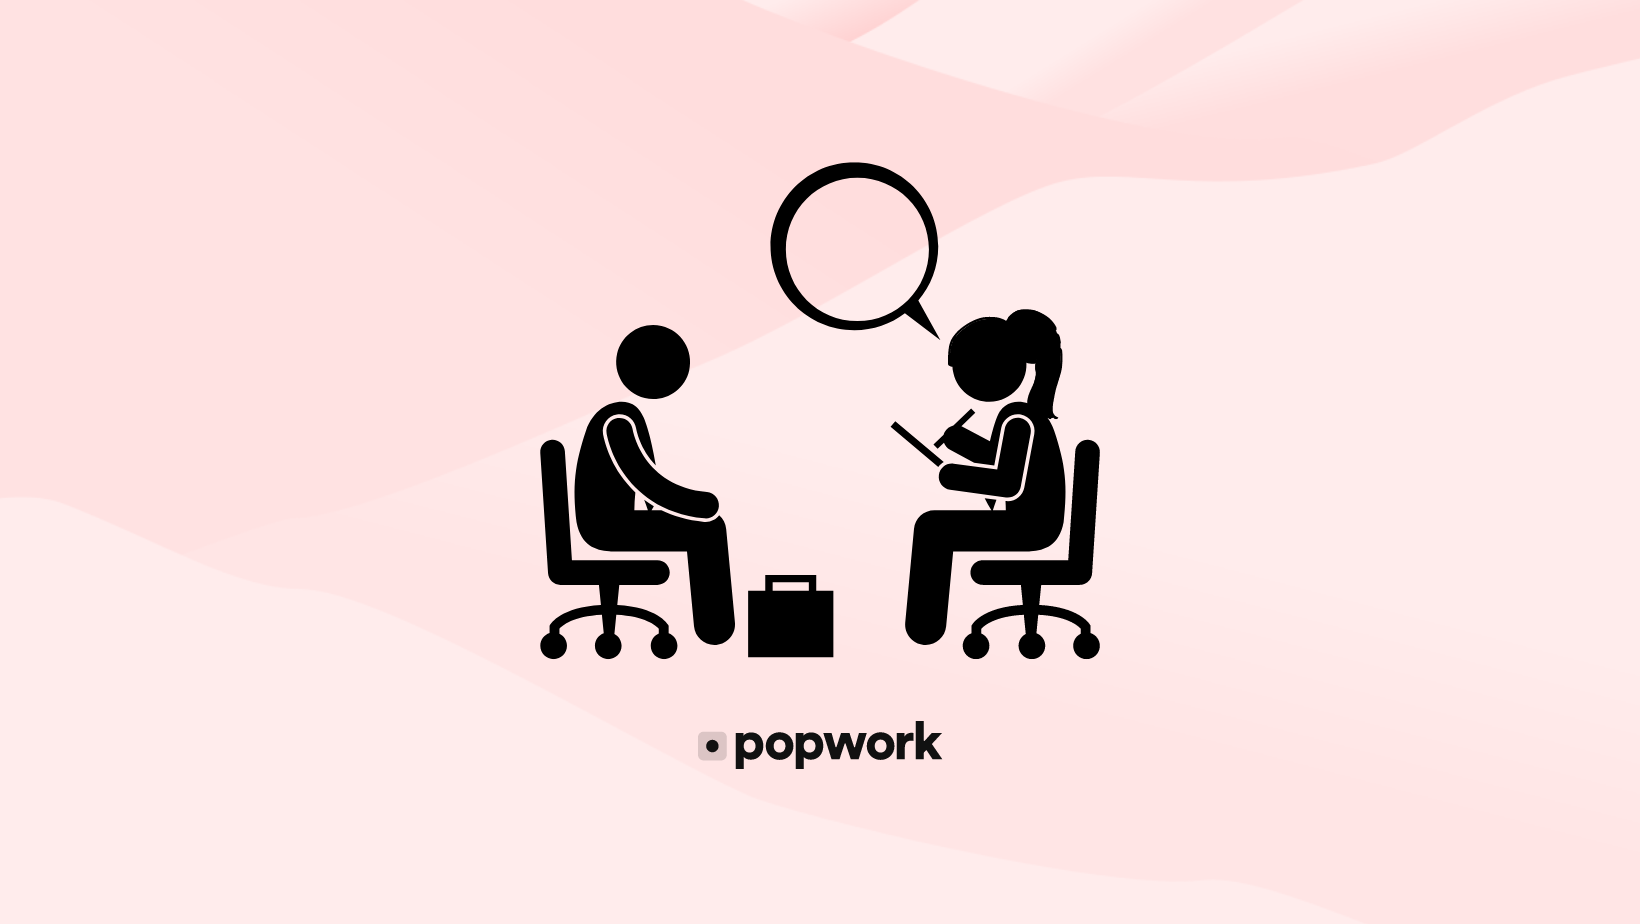 manager job interview - Popwork